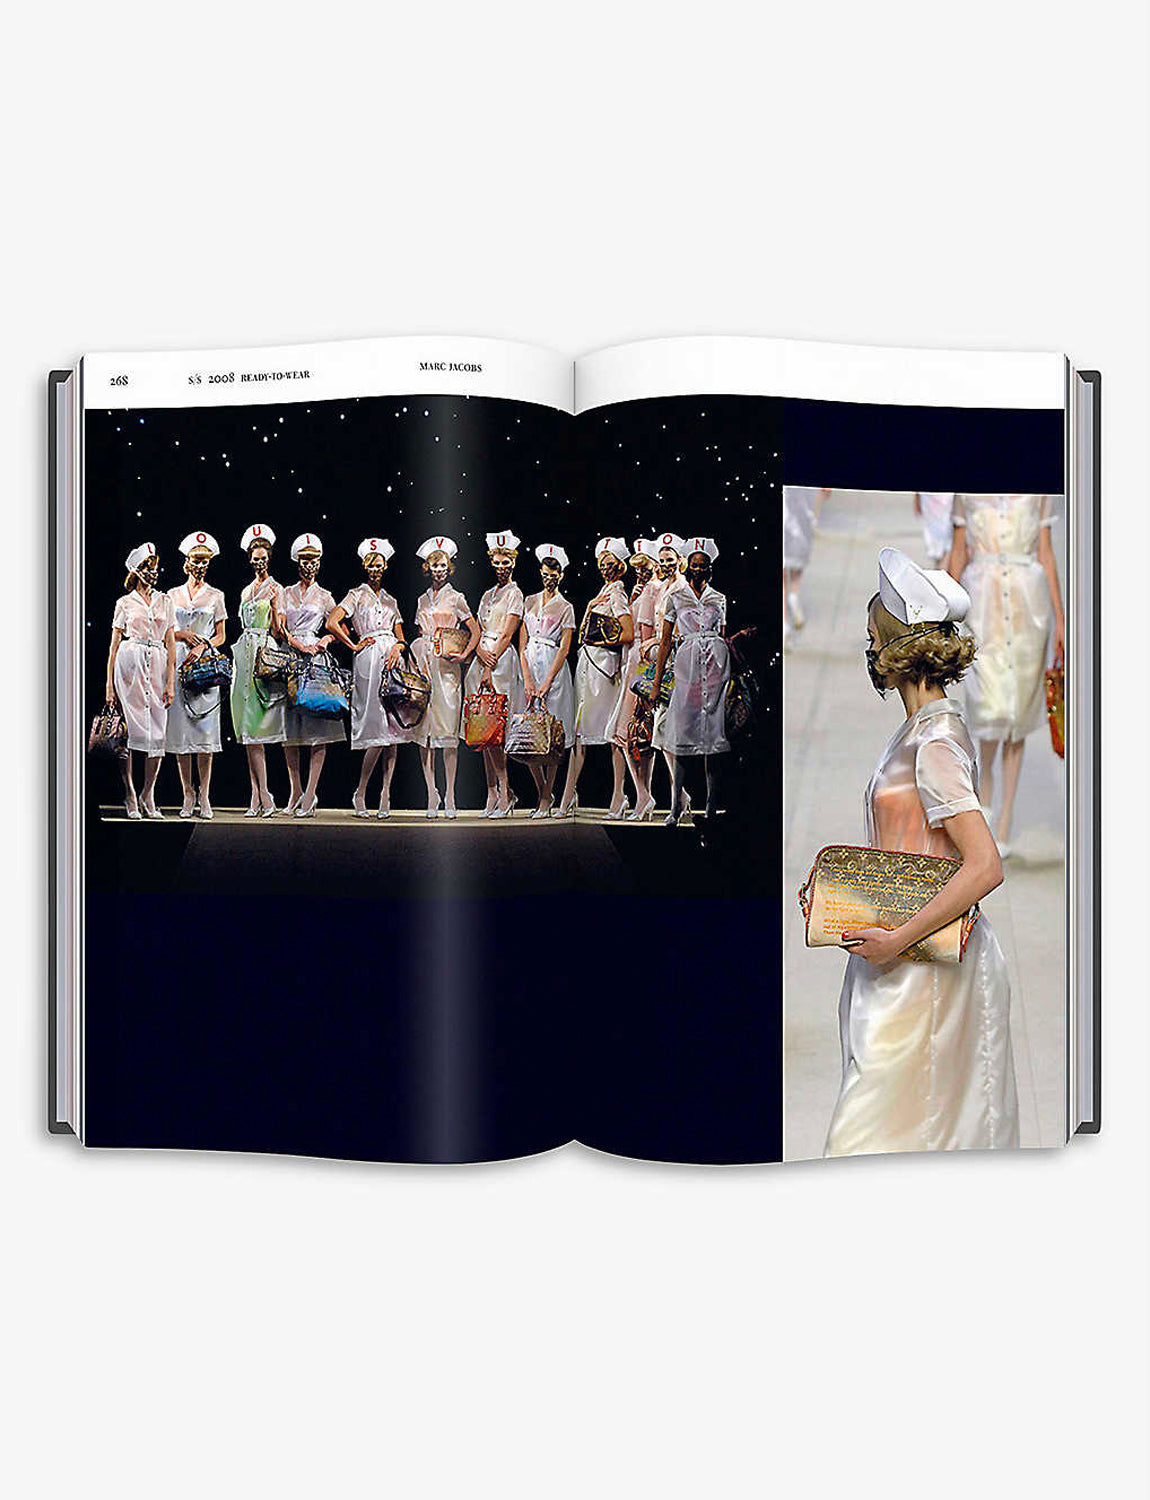 Louis Vuitton Catwalk - Coffee Table Book